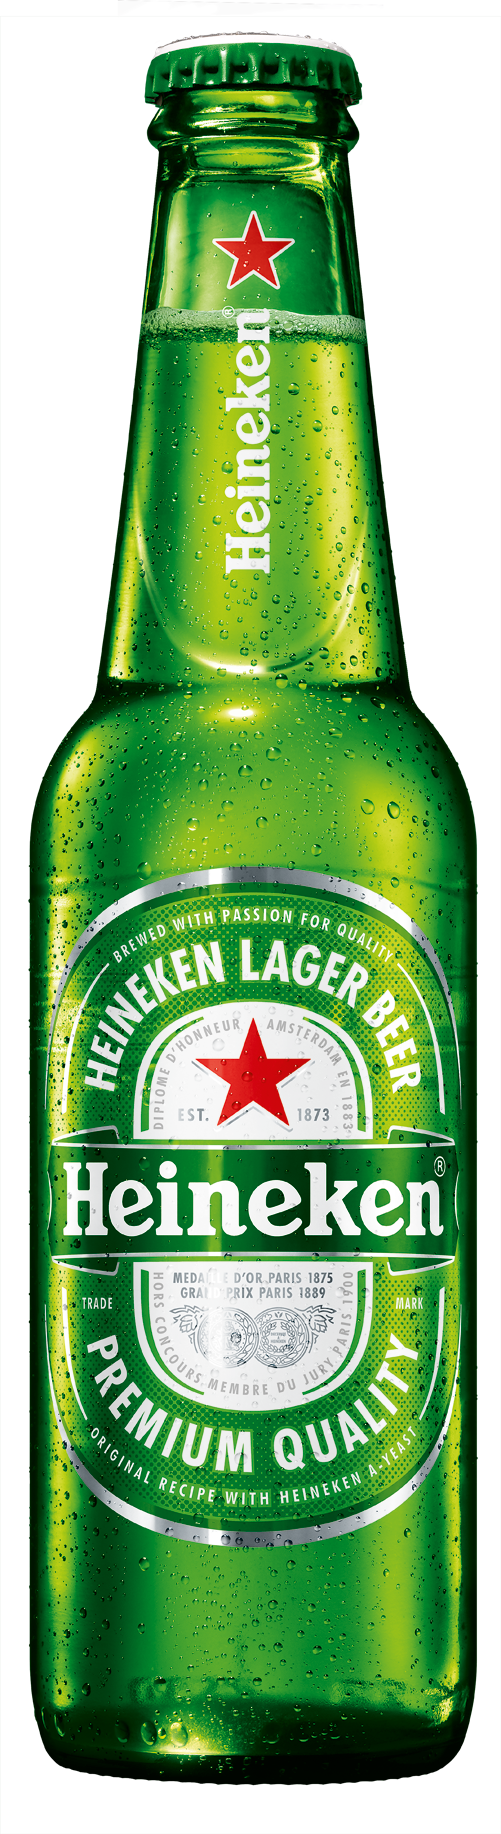 Download Heineken Bottle Png Png Image With No Background Pngkey Com